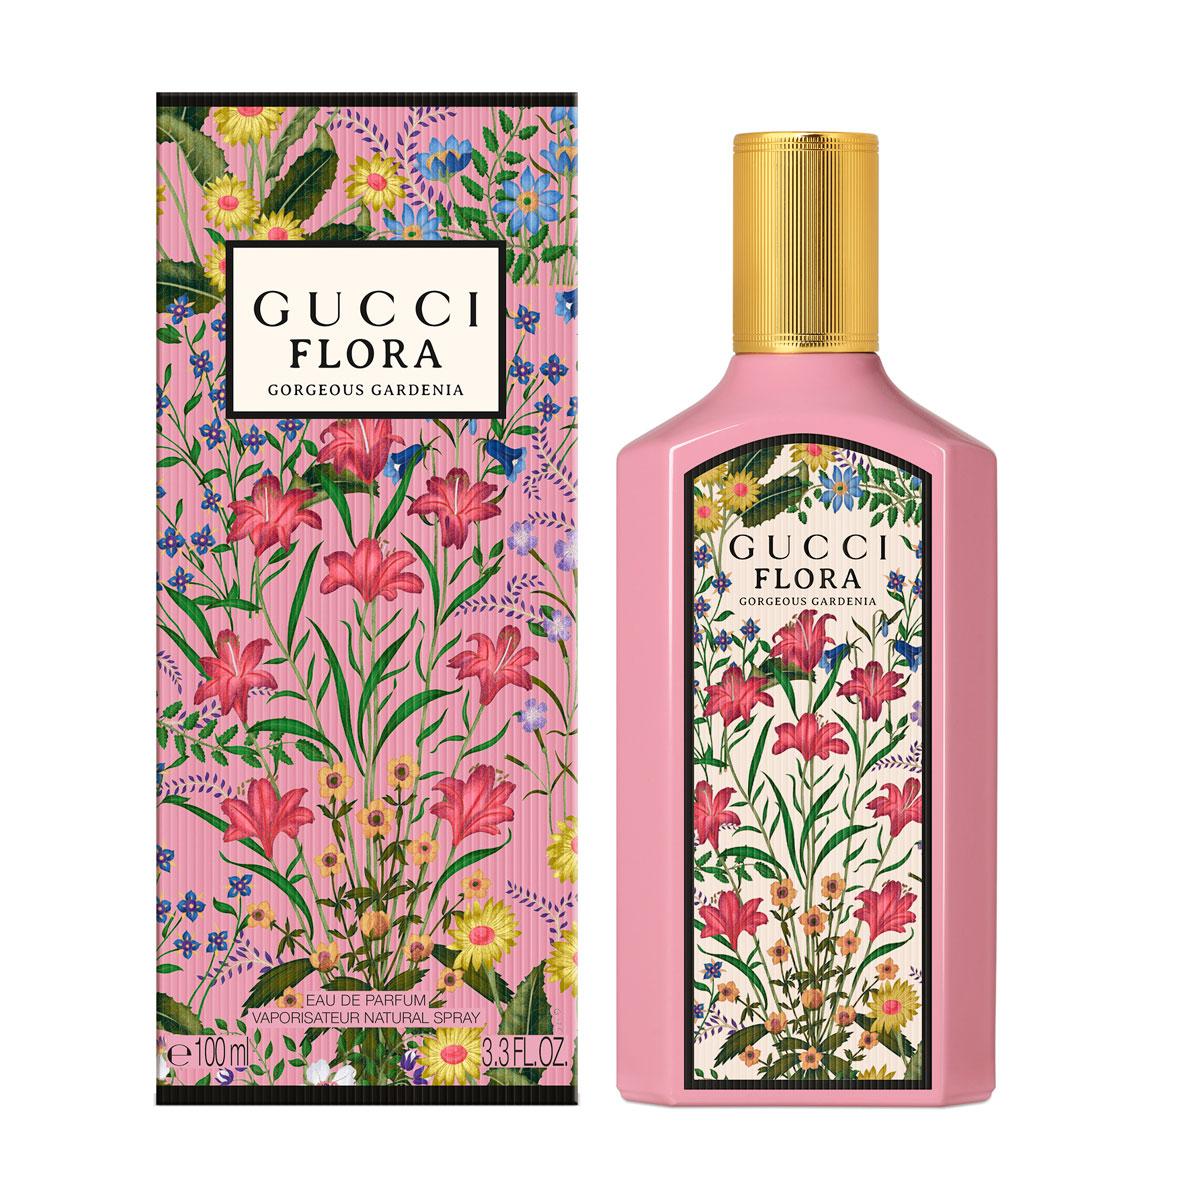 Gucci Flora Gorgeous Gardenia Eau de Parfum 100ml | SEPHORA UK